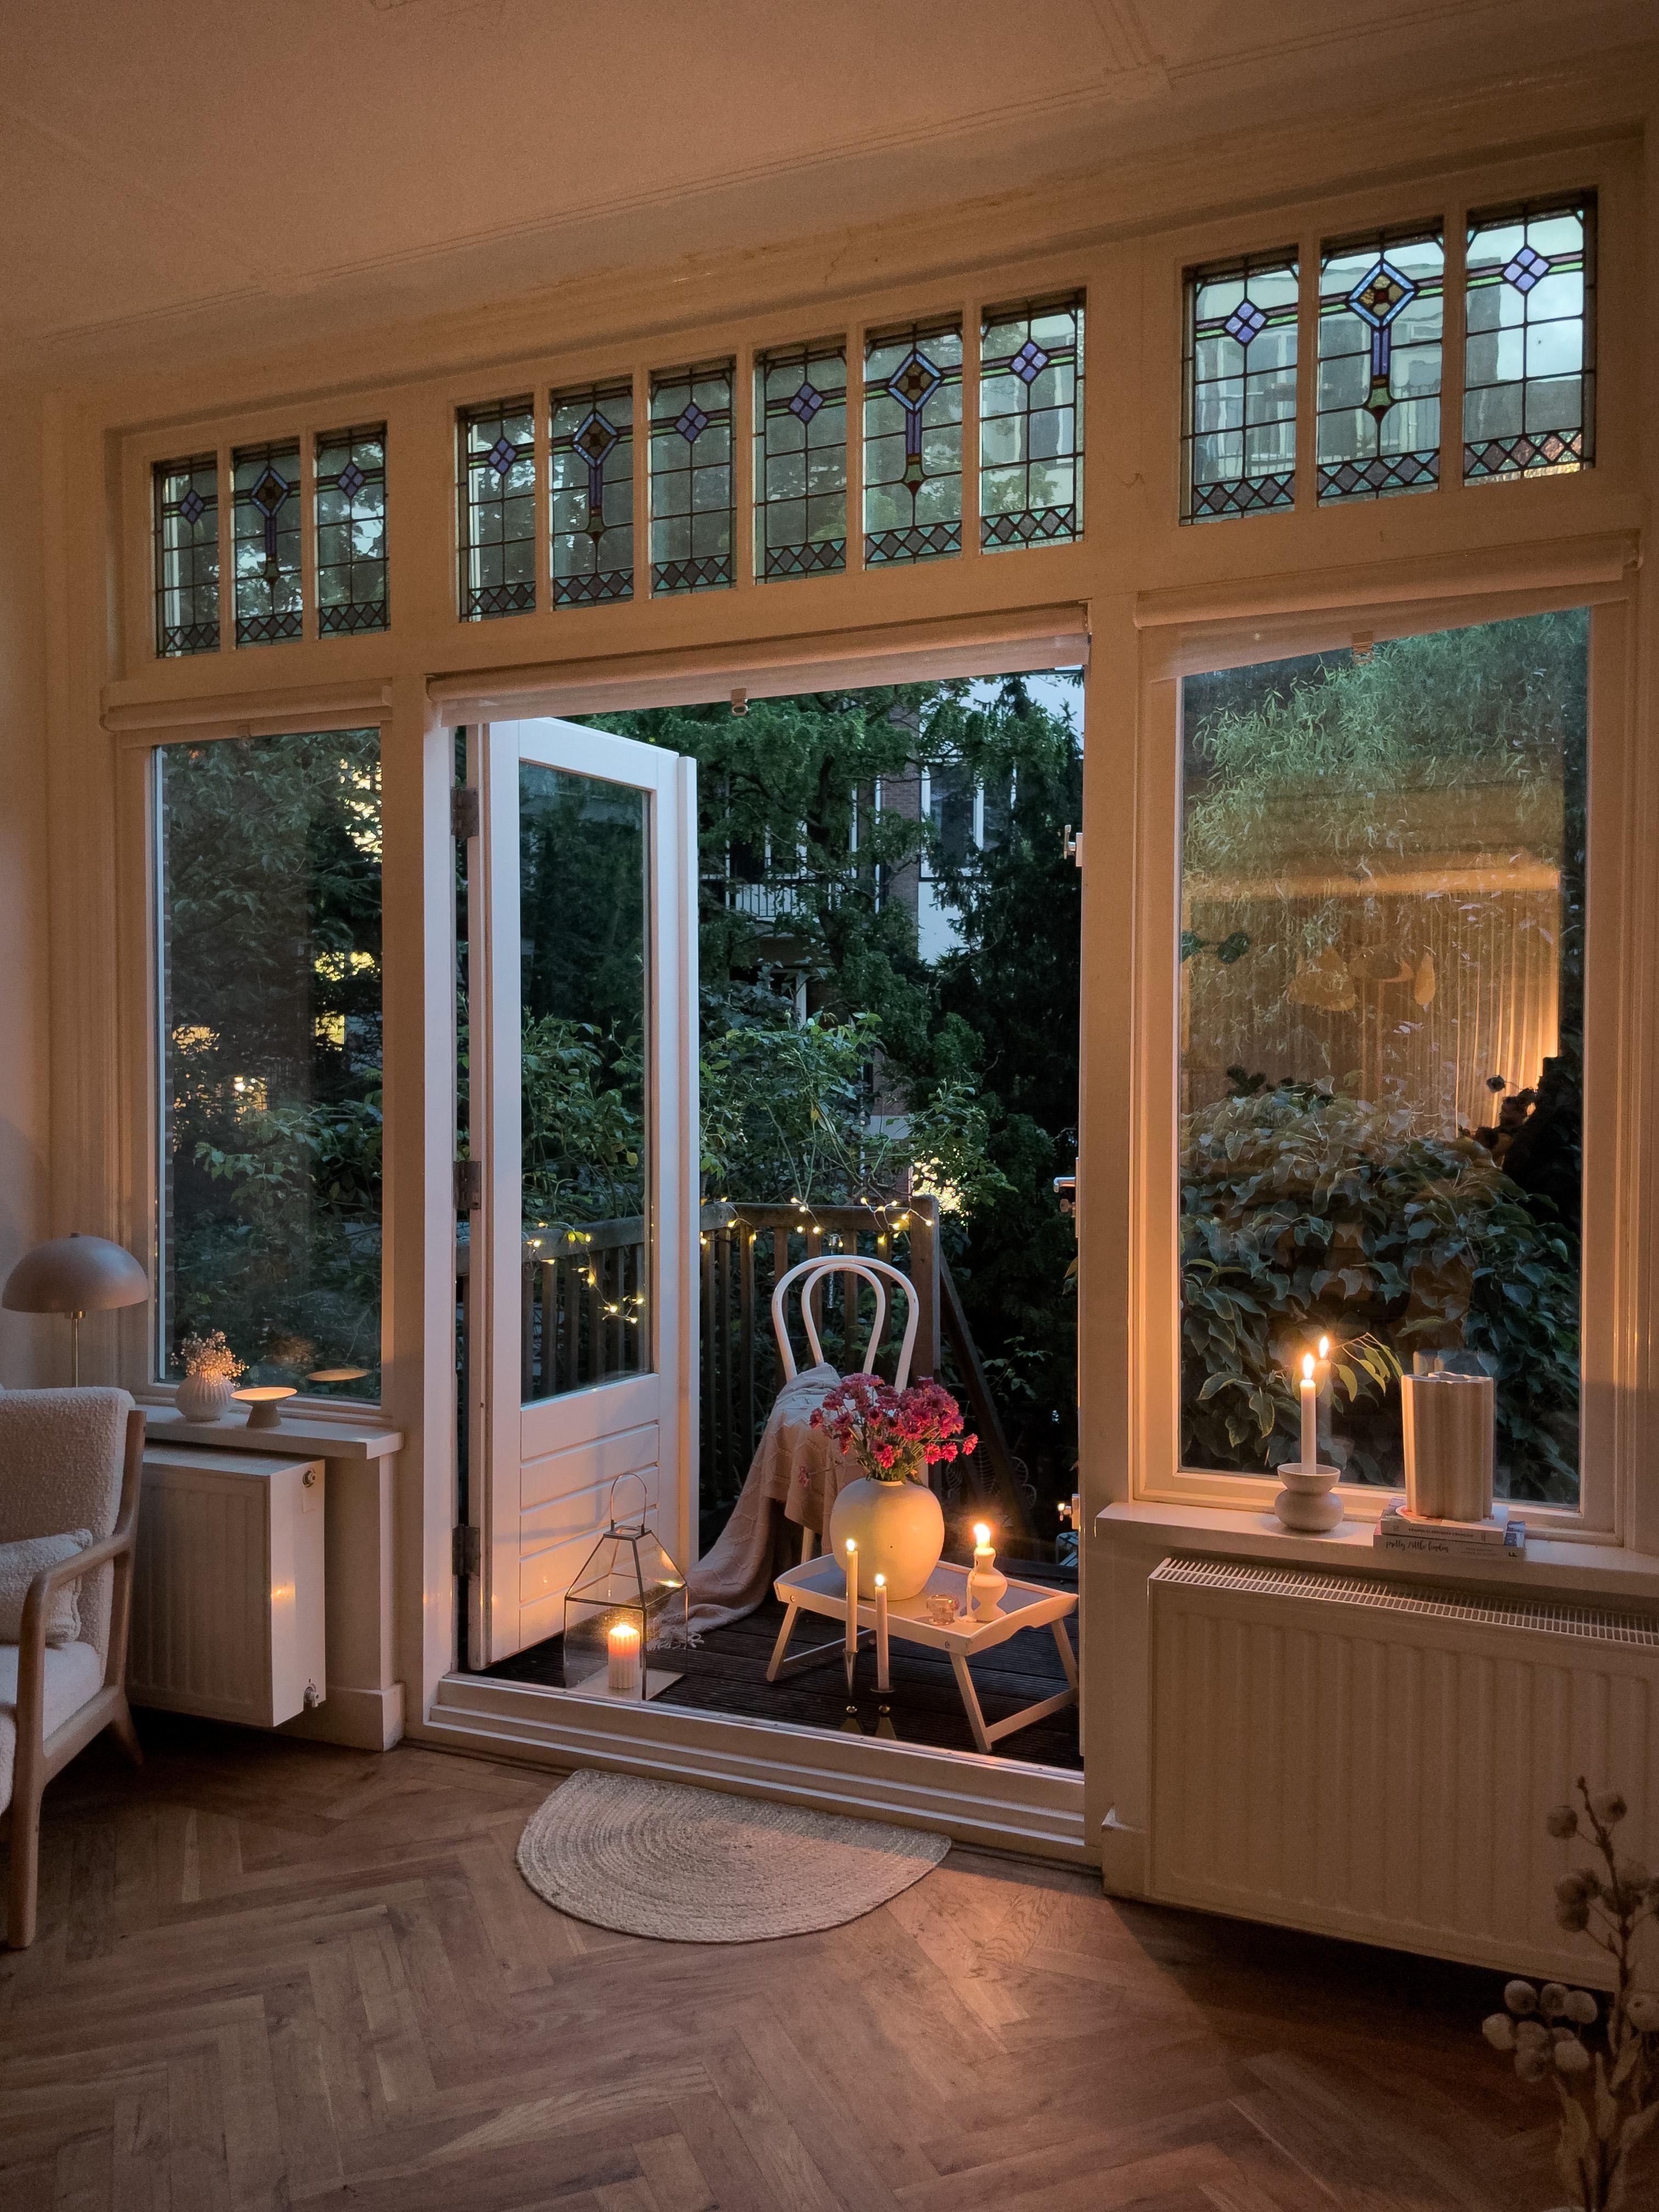 Cozy summer evening #hygge #cozy #balkon #terrasse #kerzen #garten #altbau #altbauwohnung